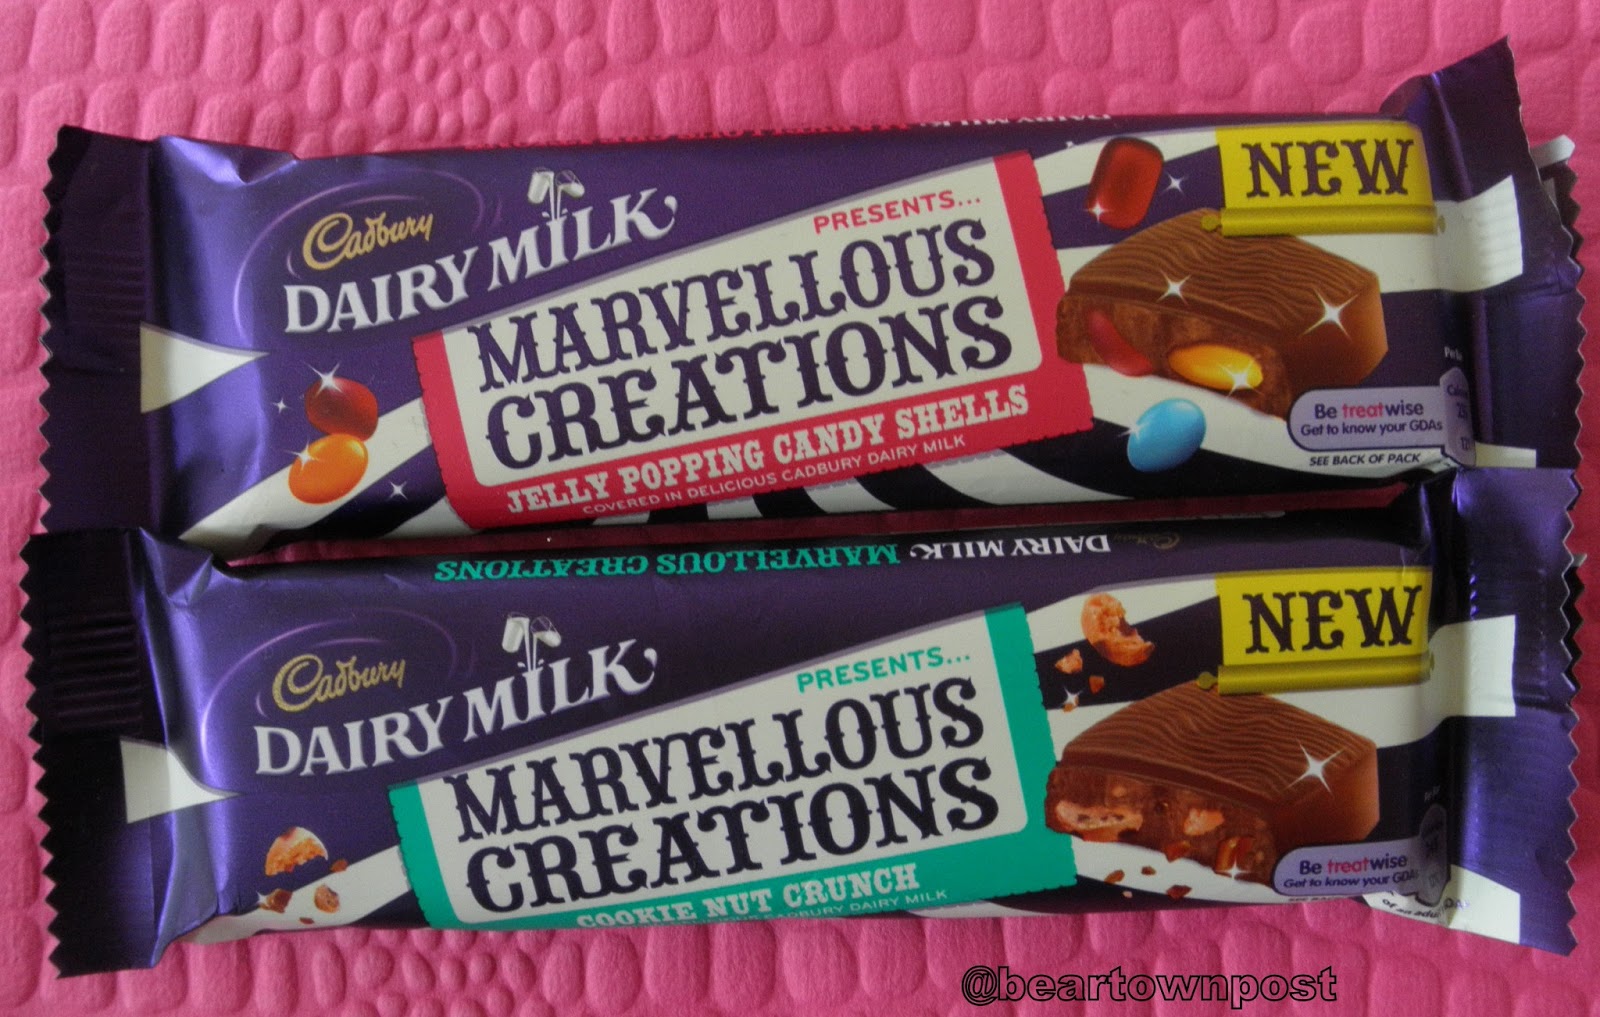 The Beartown Post Marvellous Cadbury Creations!